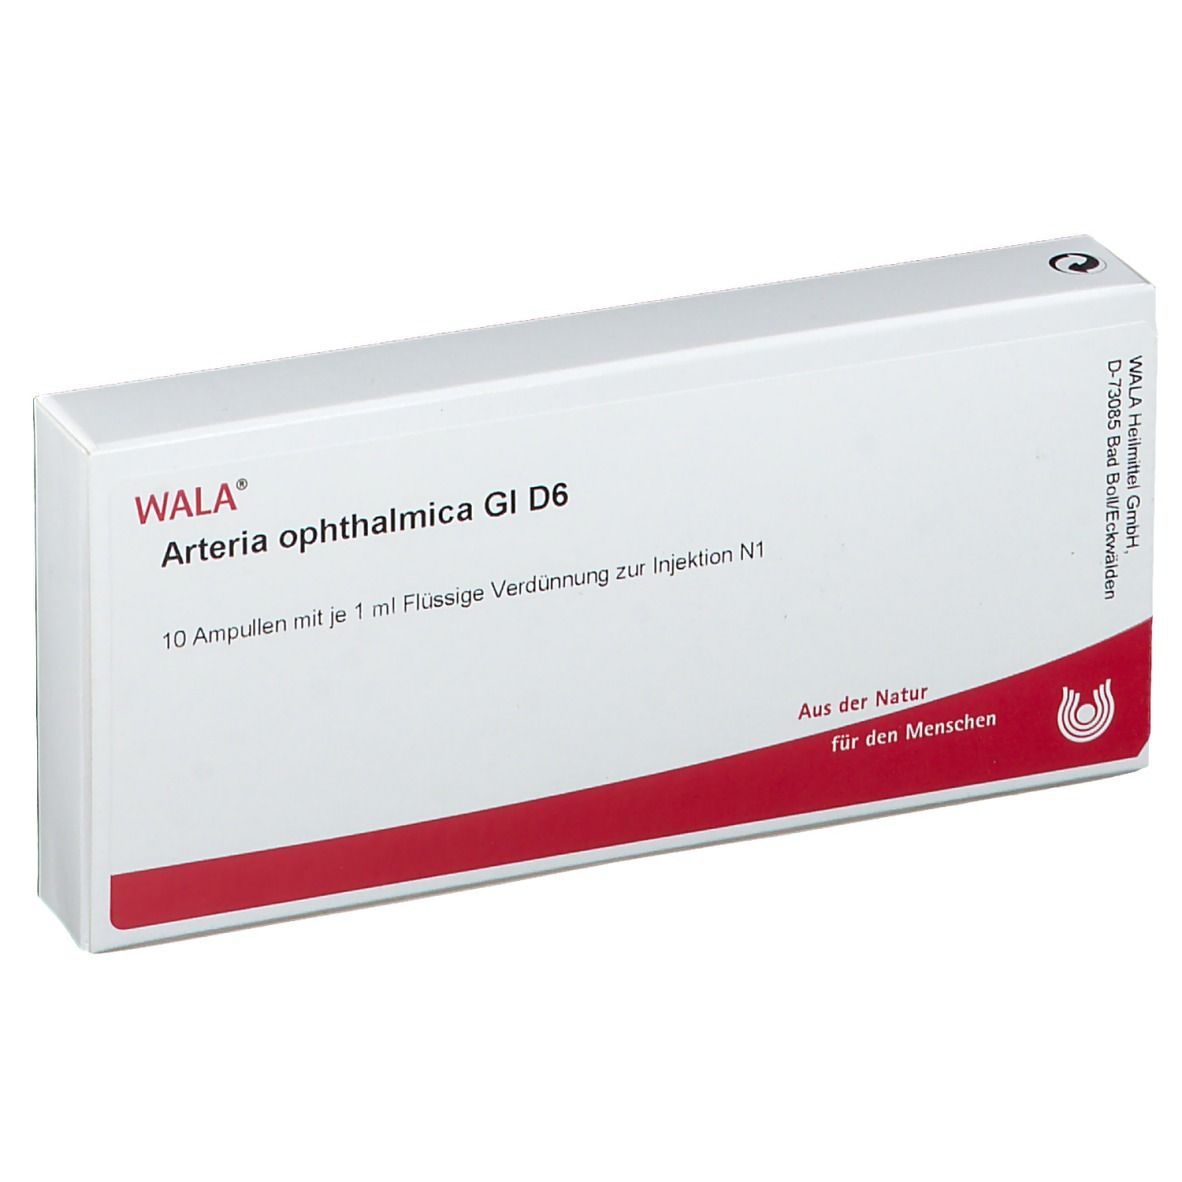 WALA® Arteria ophthalmica Gl D 6